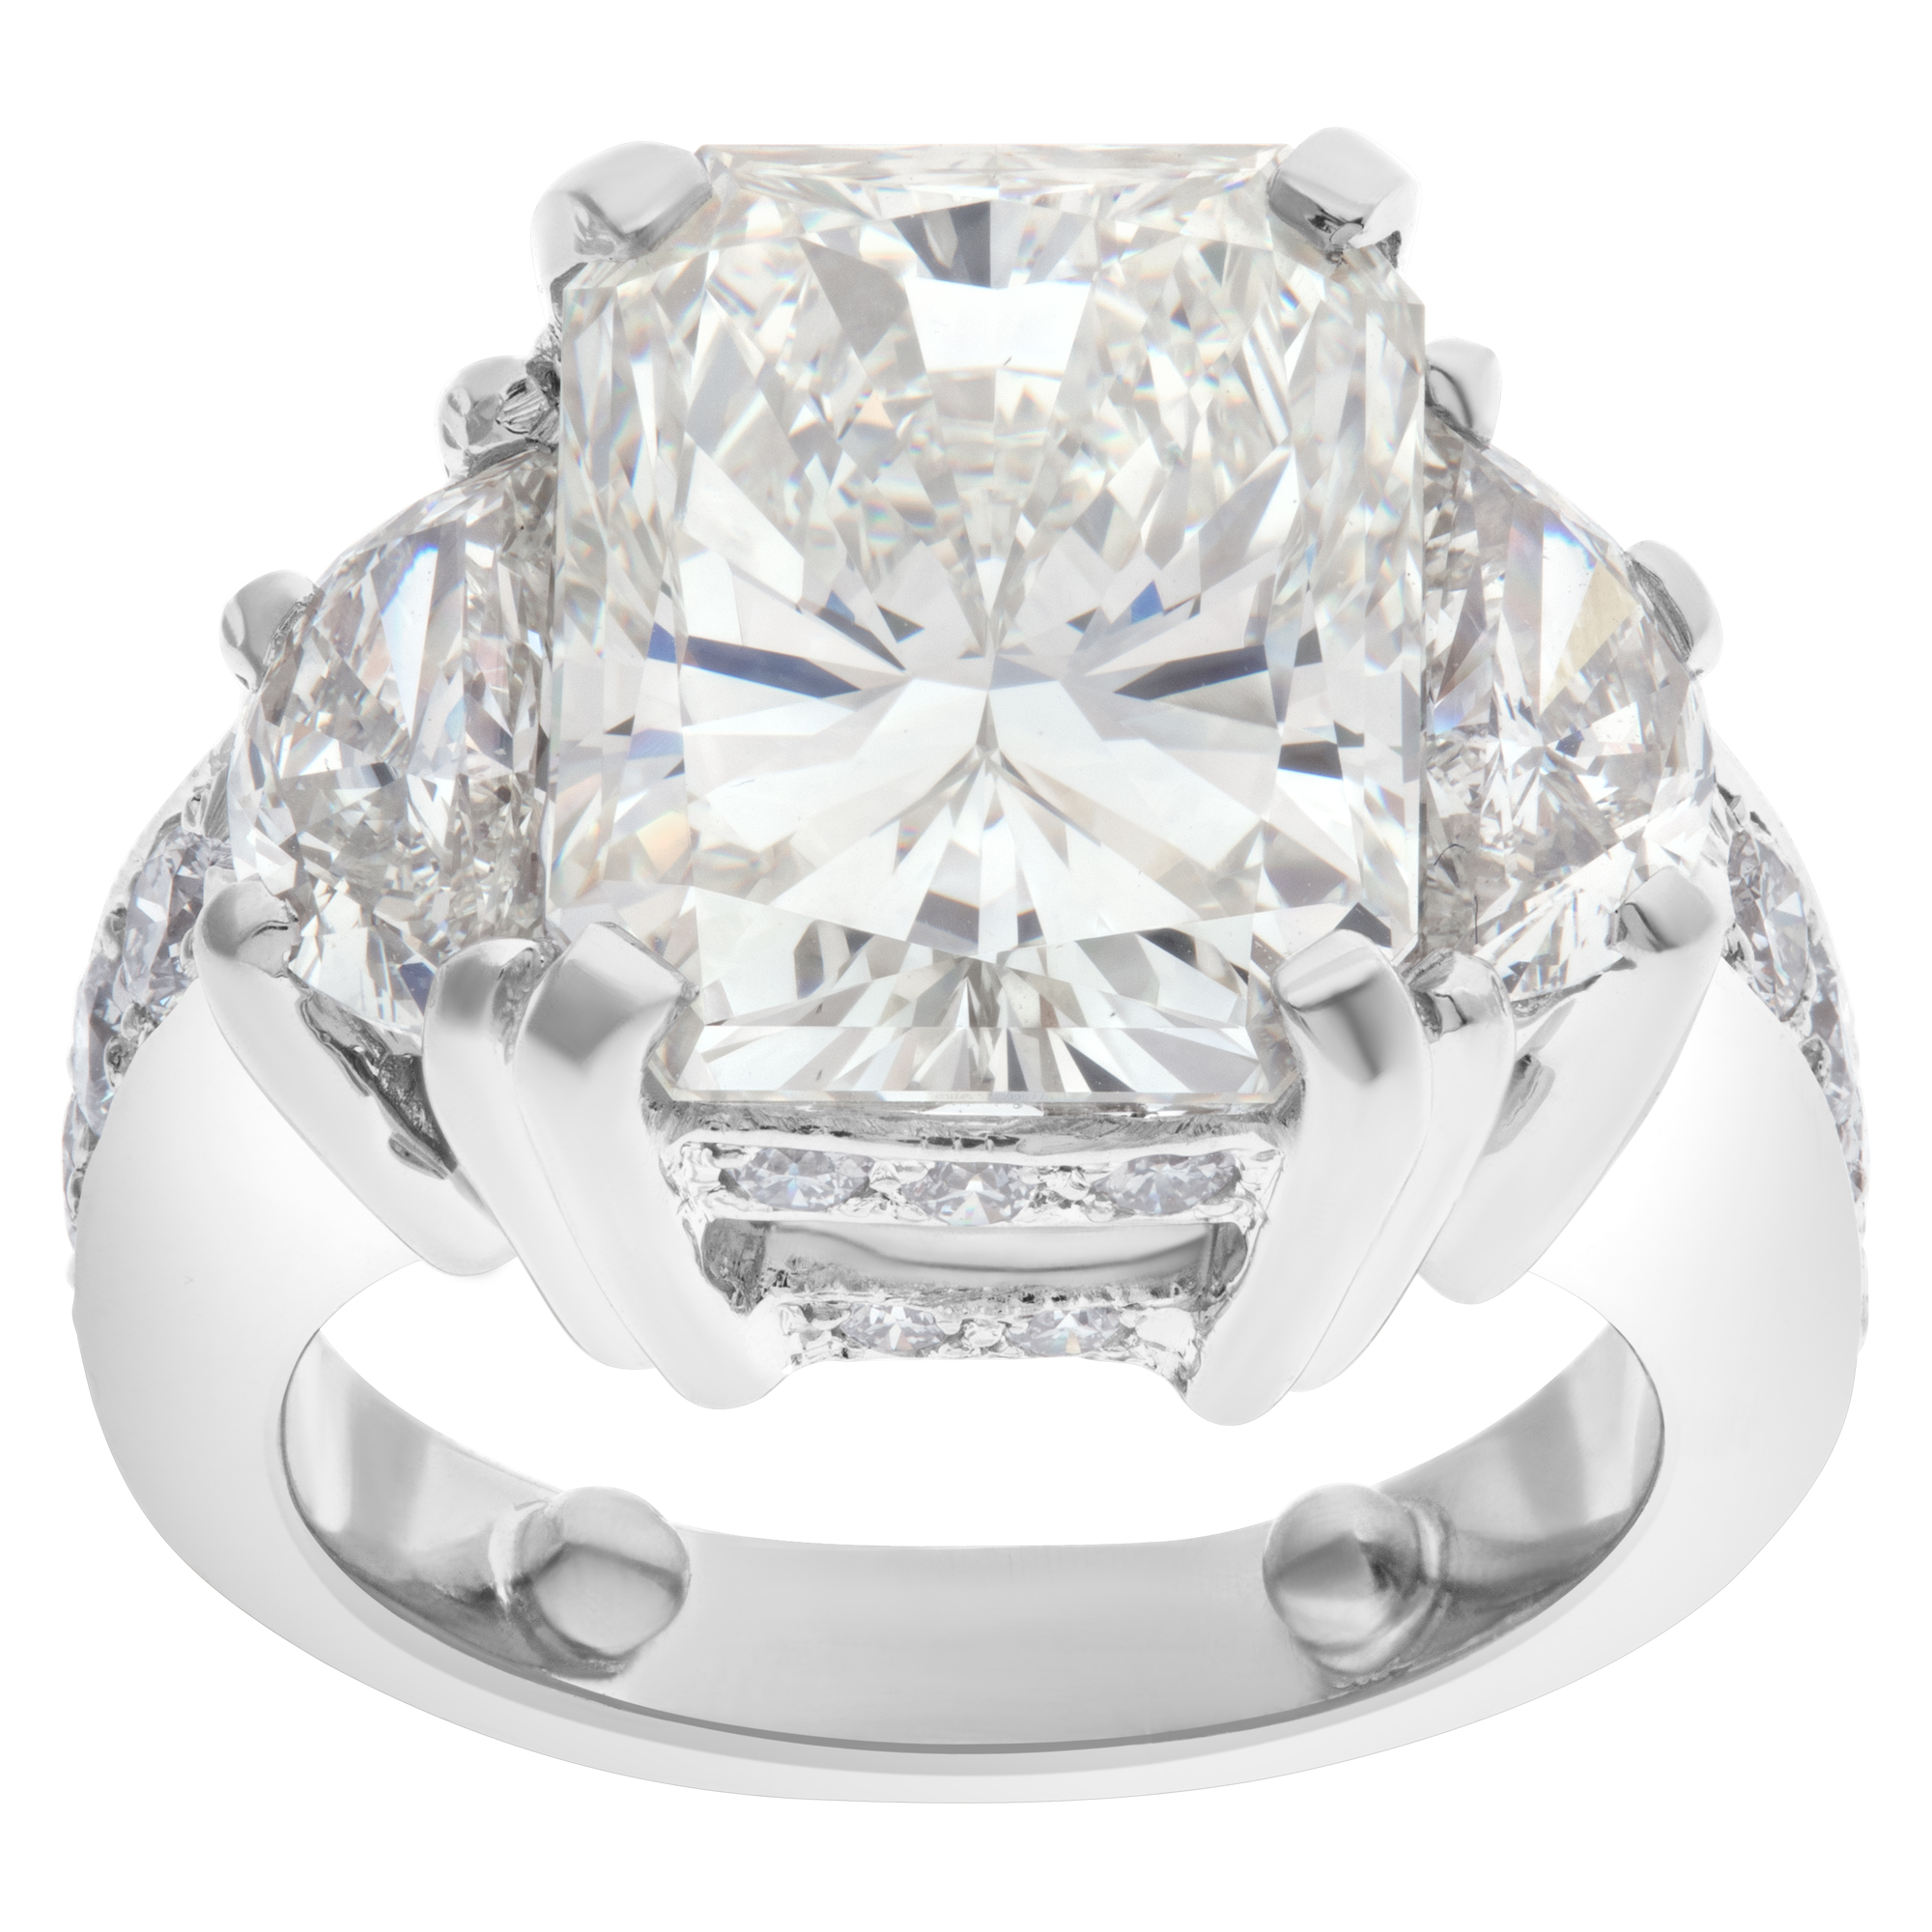 GIA certified cut-cornered rectangular modified brilliant cut diamond 7.21 carat (K color, VS1 clarity) ring image 1